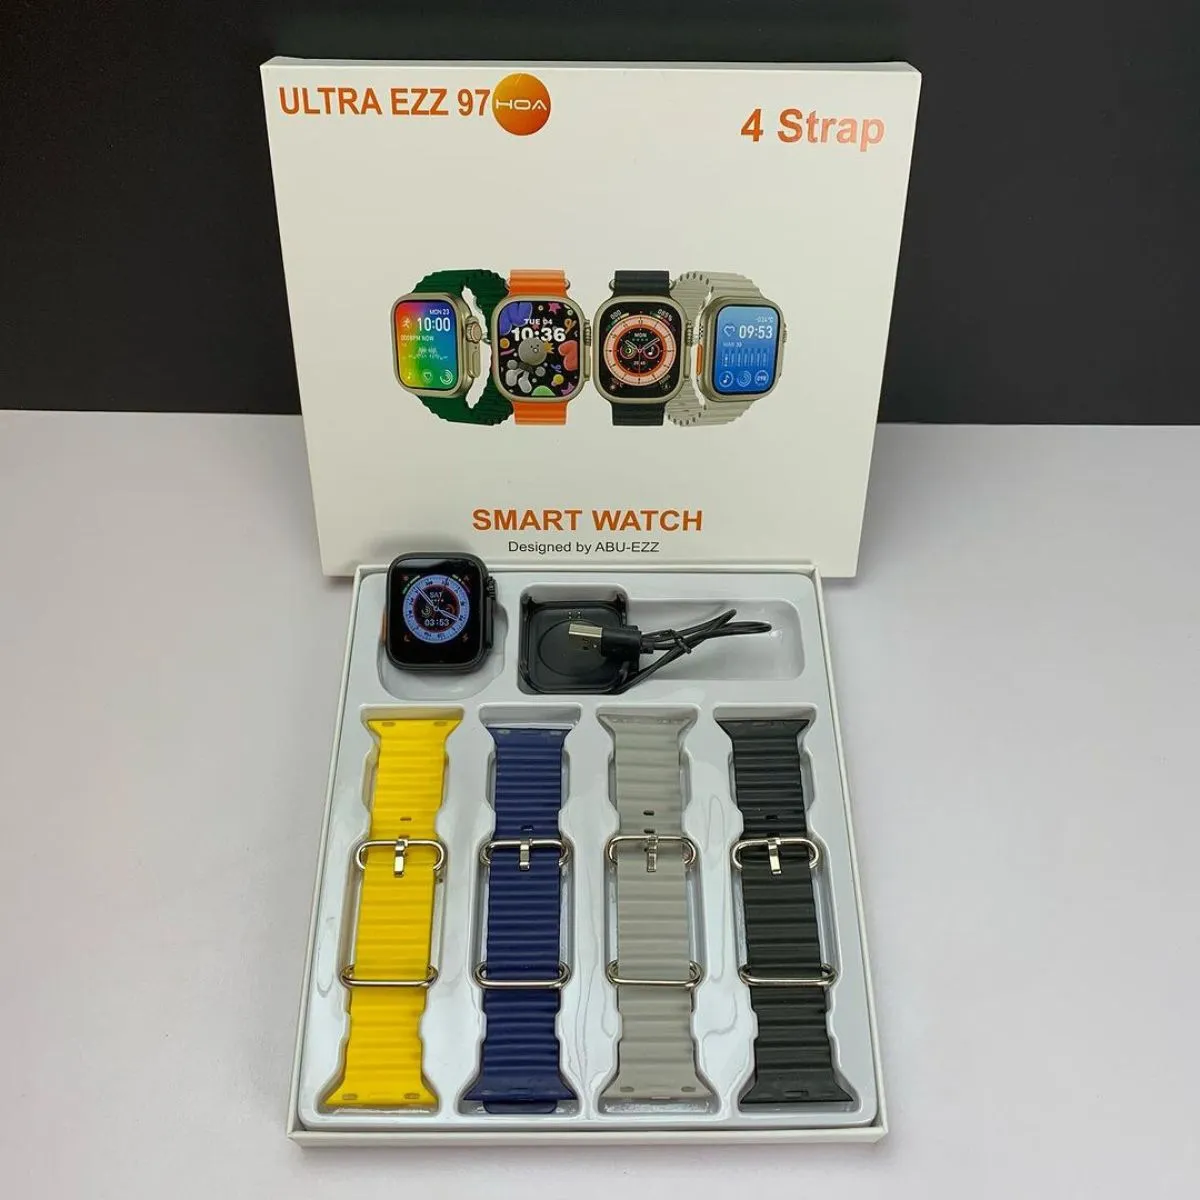 Buy EZZ 97 Ultra 4 In 1 Smart Watch at best price in Pakistan | Rhizmall.pk